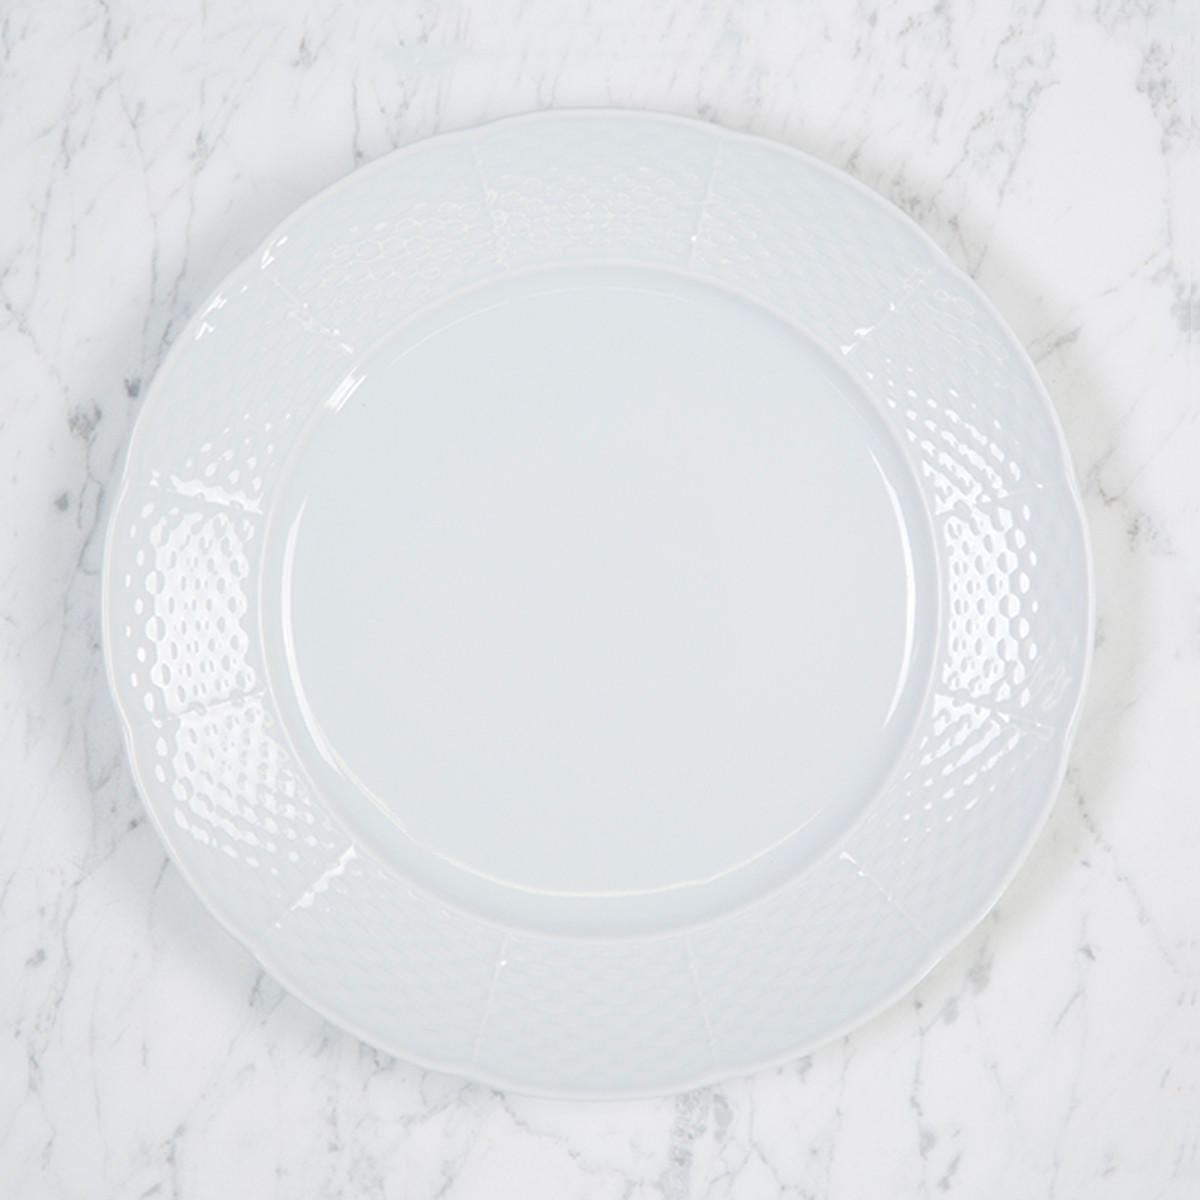 Bisram-spehe Dinner Plate Whiteware 10.25", BISRAM SPREHE WEDDING WHITE WARE 10.25, Sasha Nicholas